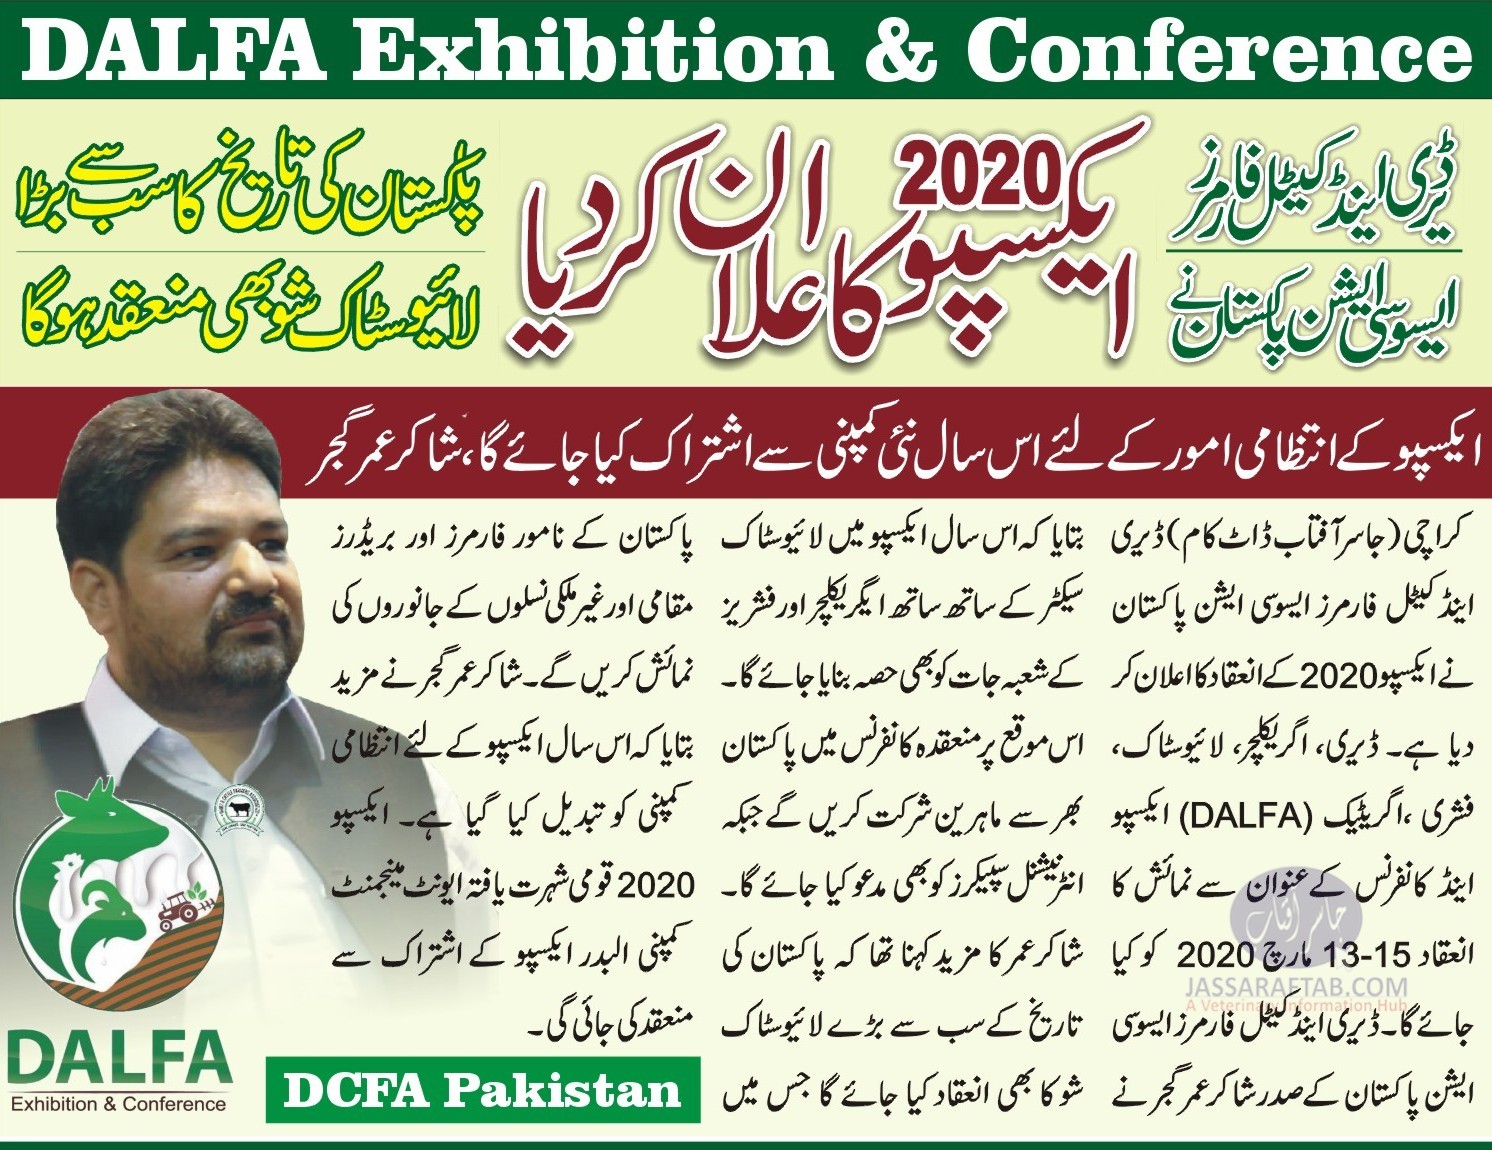 DALFA Expo to be organized by DCFA Pakistan